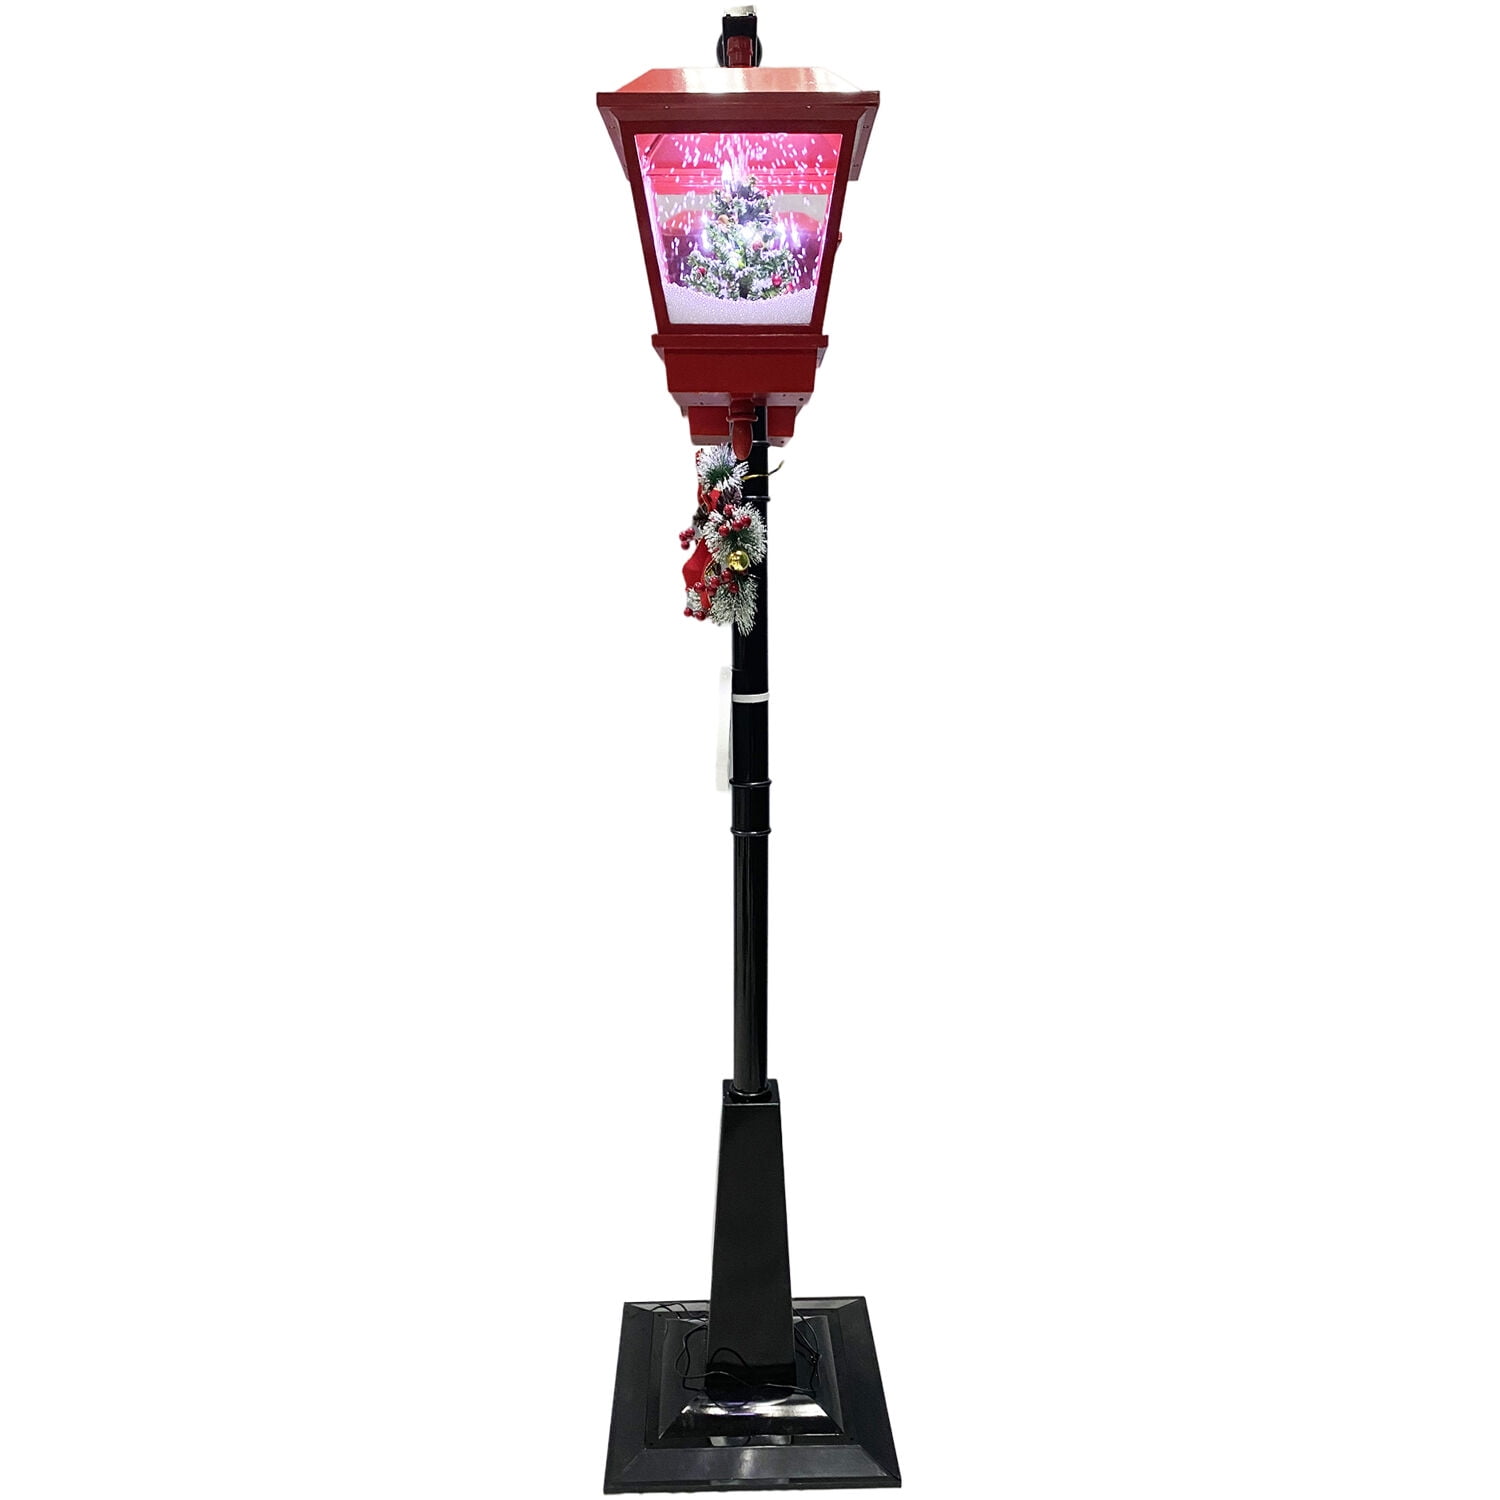 LED Lantern Street Lamps Set of 2 265532